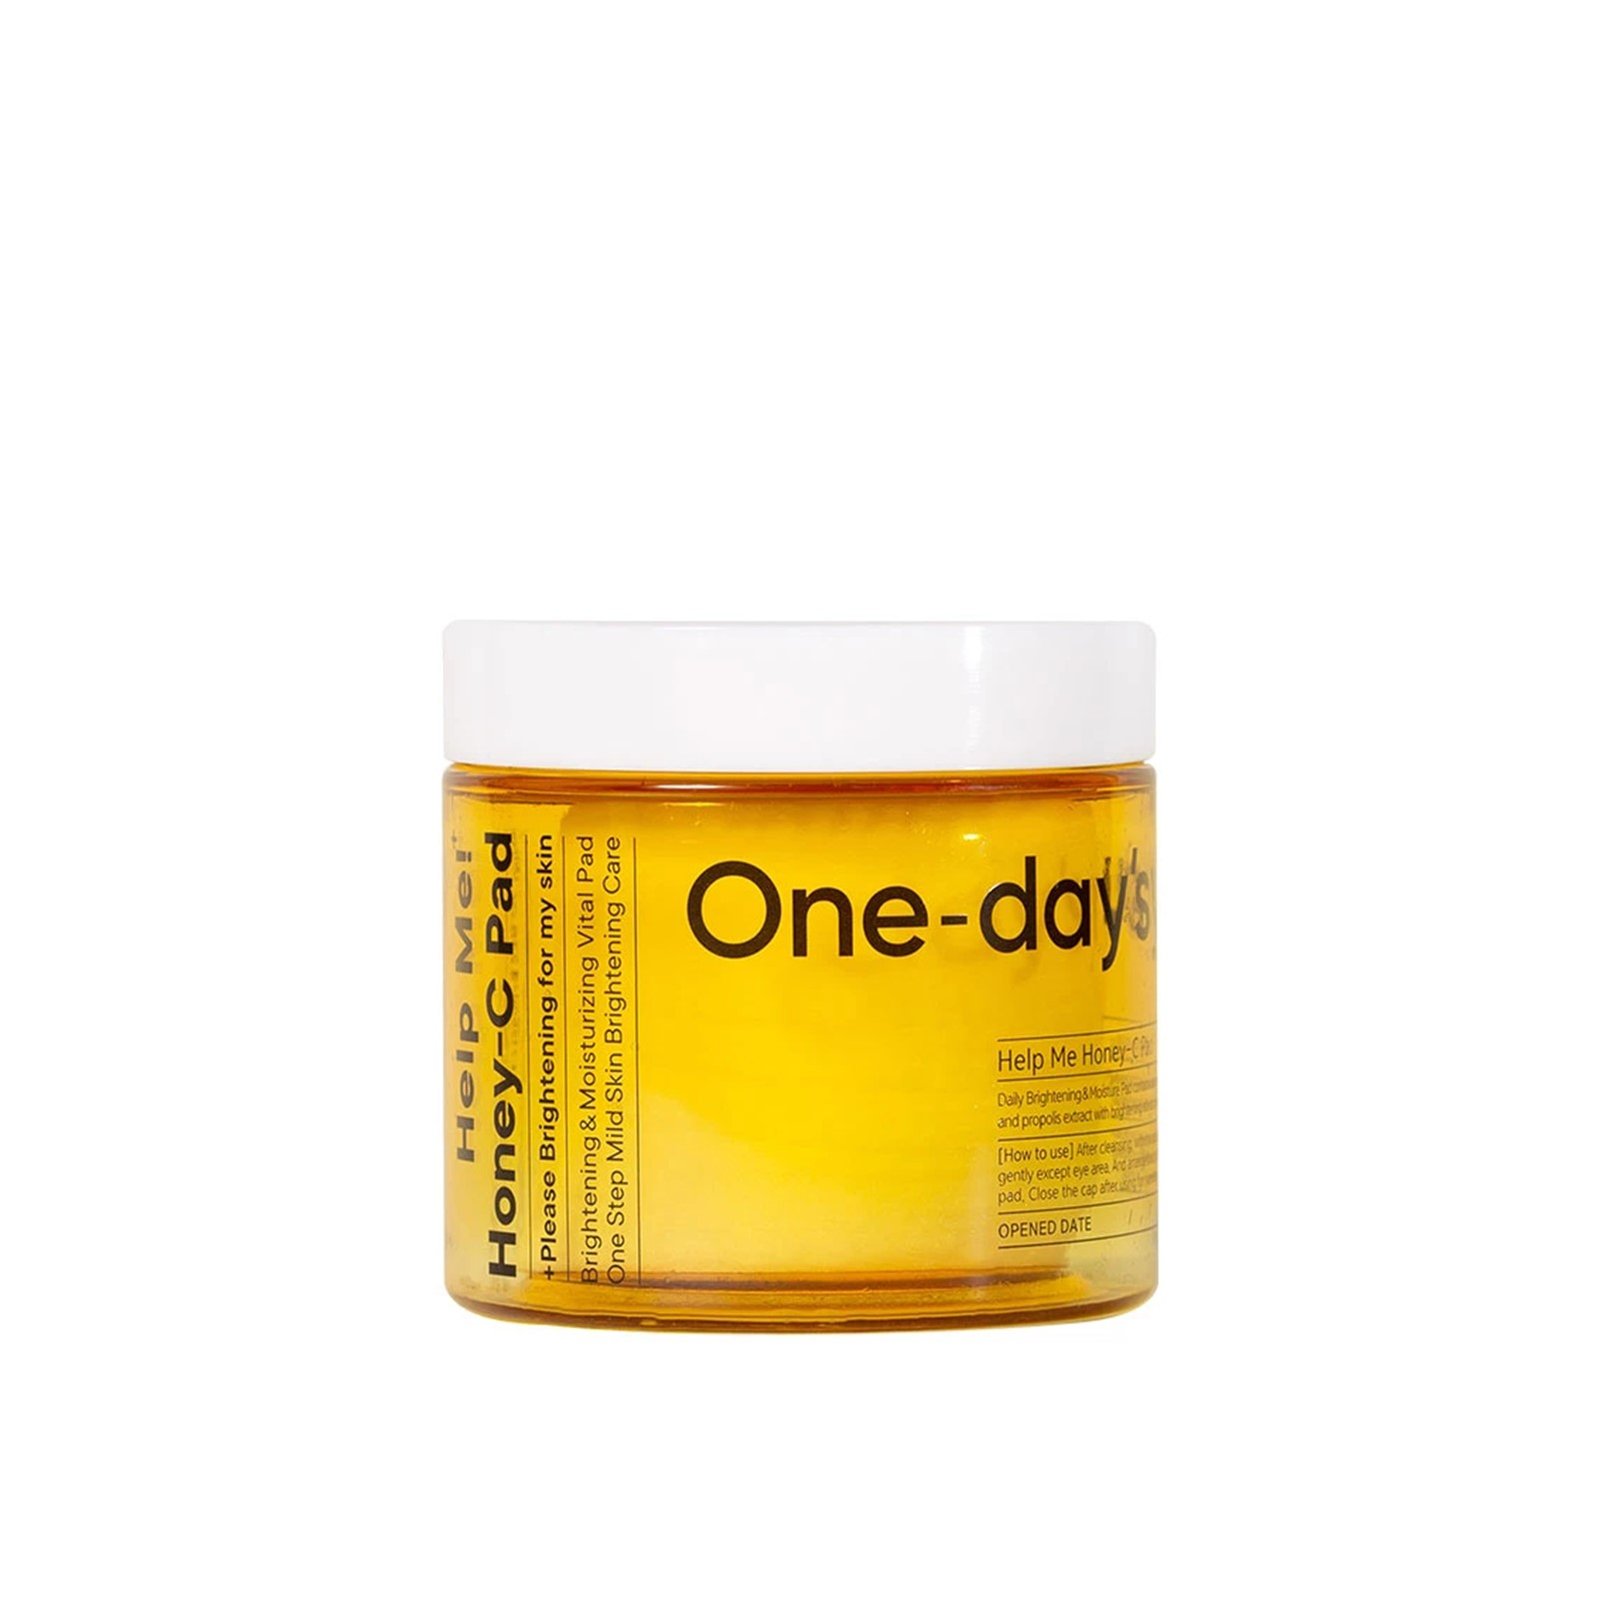 One-day's you Help Me Brightening Honey-C Pad x60 (4.23 fl oz)